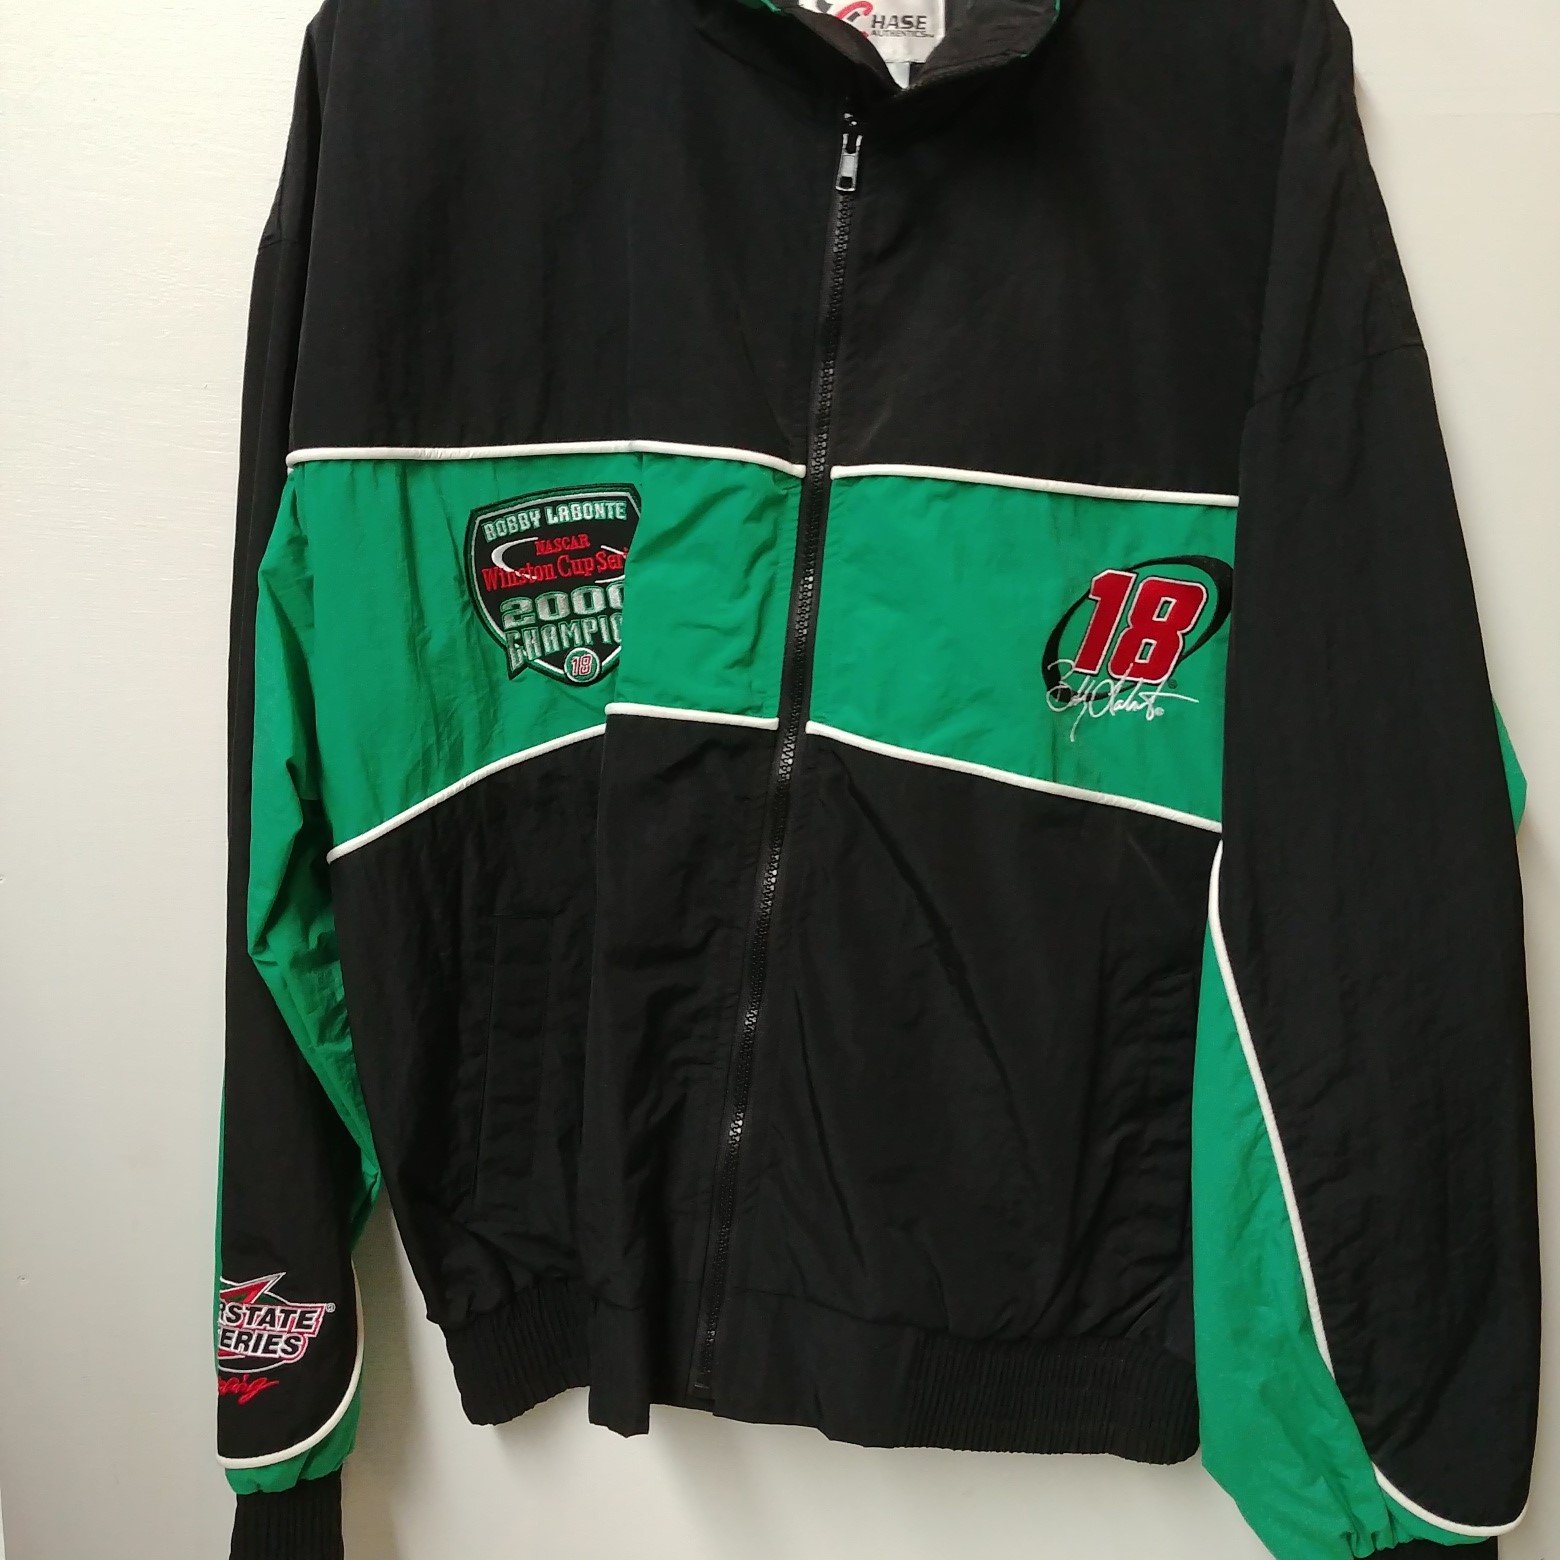 2000 Bobby Labonte Interstate Batteries "Winston Cup Champion" wind breaker jacket